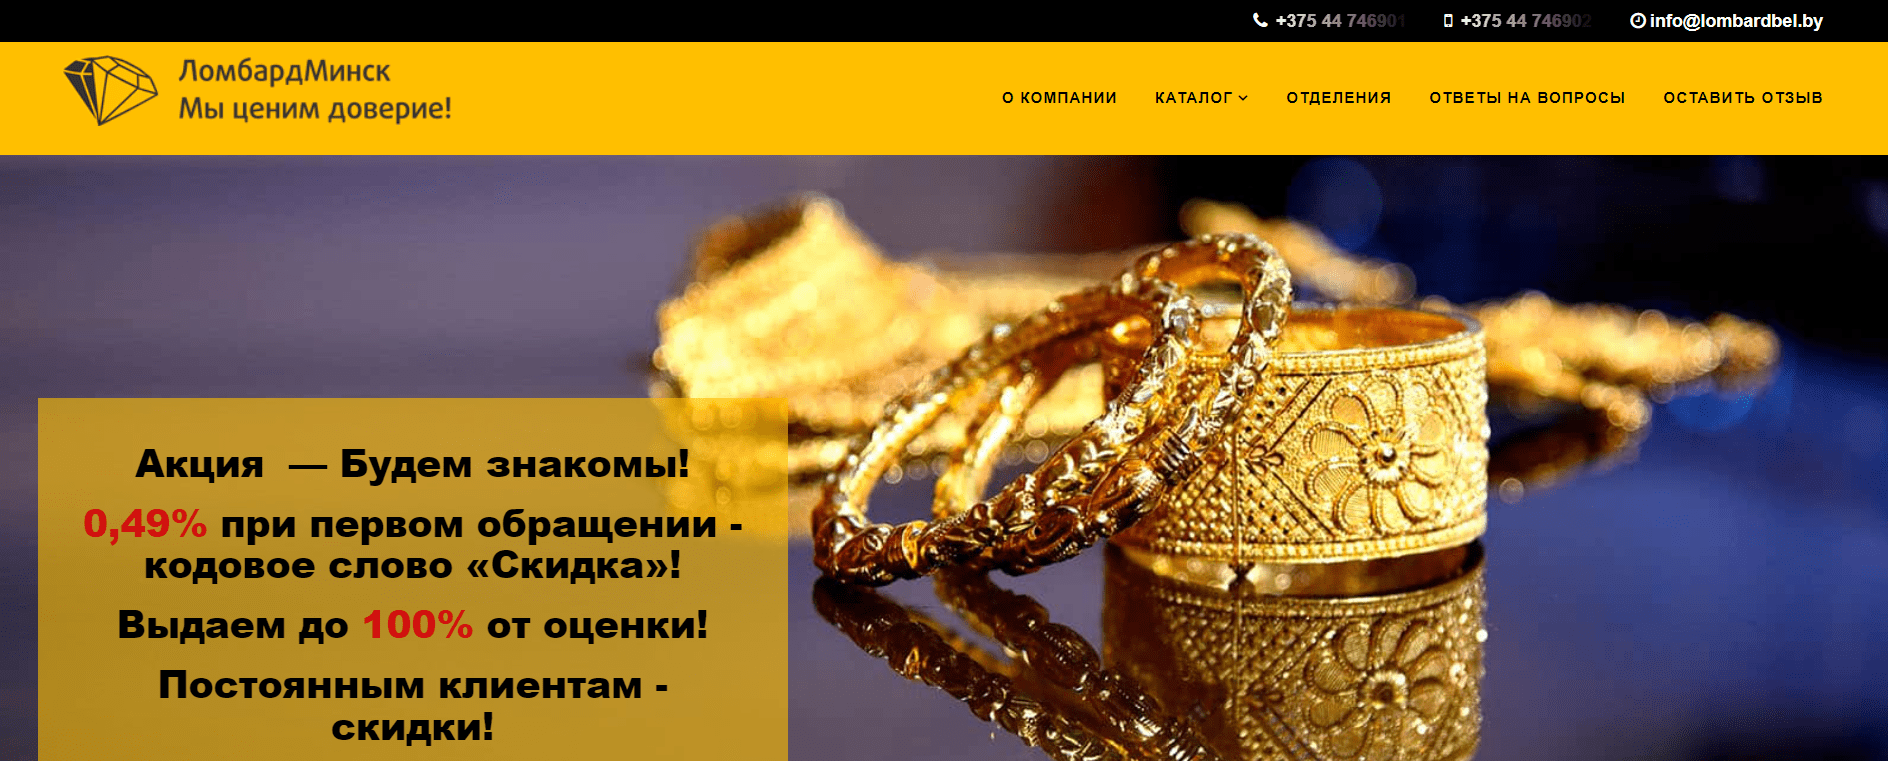 ЛомбардМинск (lombardbel.by) - официальный сайт